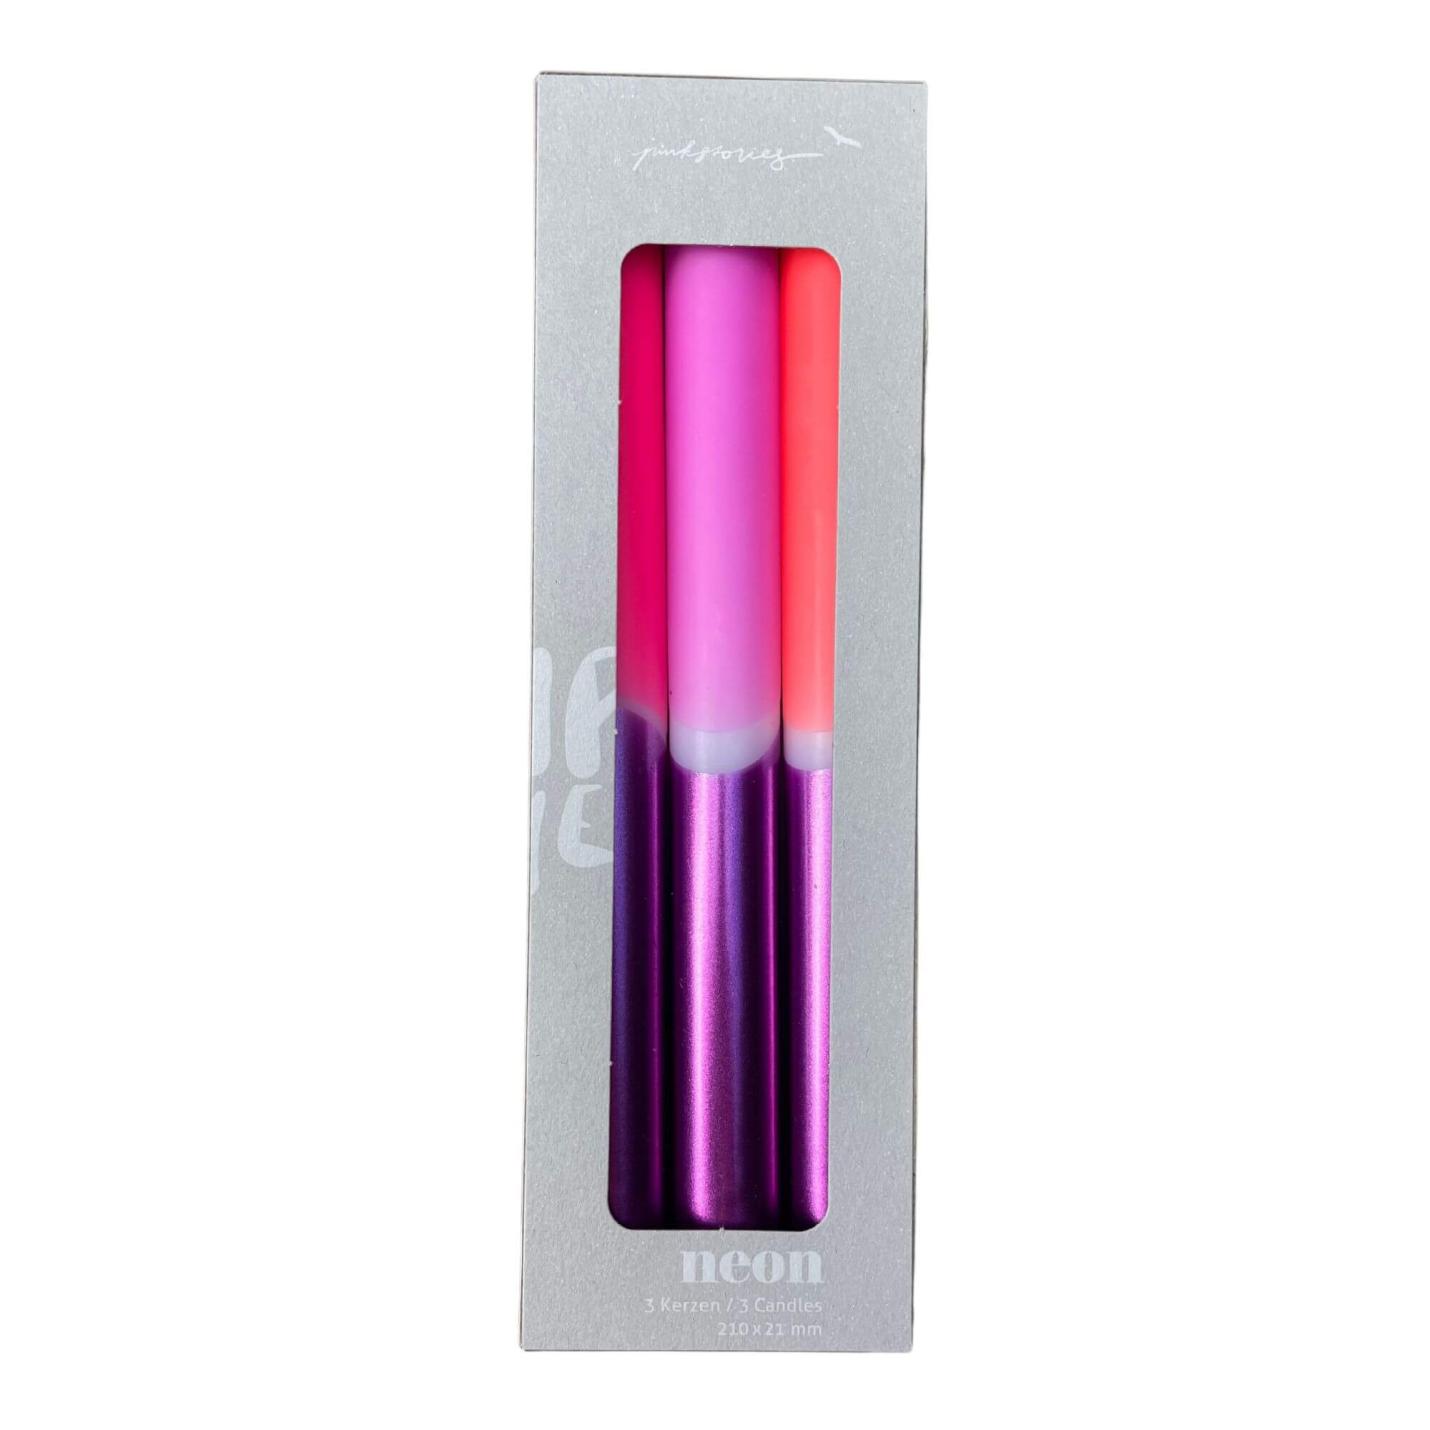 Dip Dye Xenon glossy kaarsen per 3 verpakt - Pink Stories; Afbeelding: 2